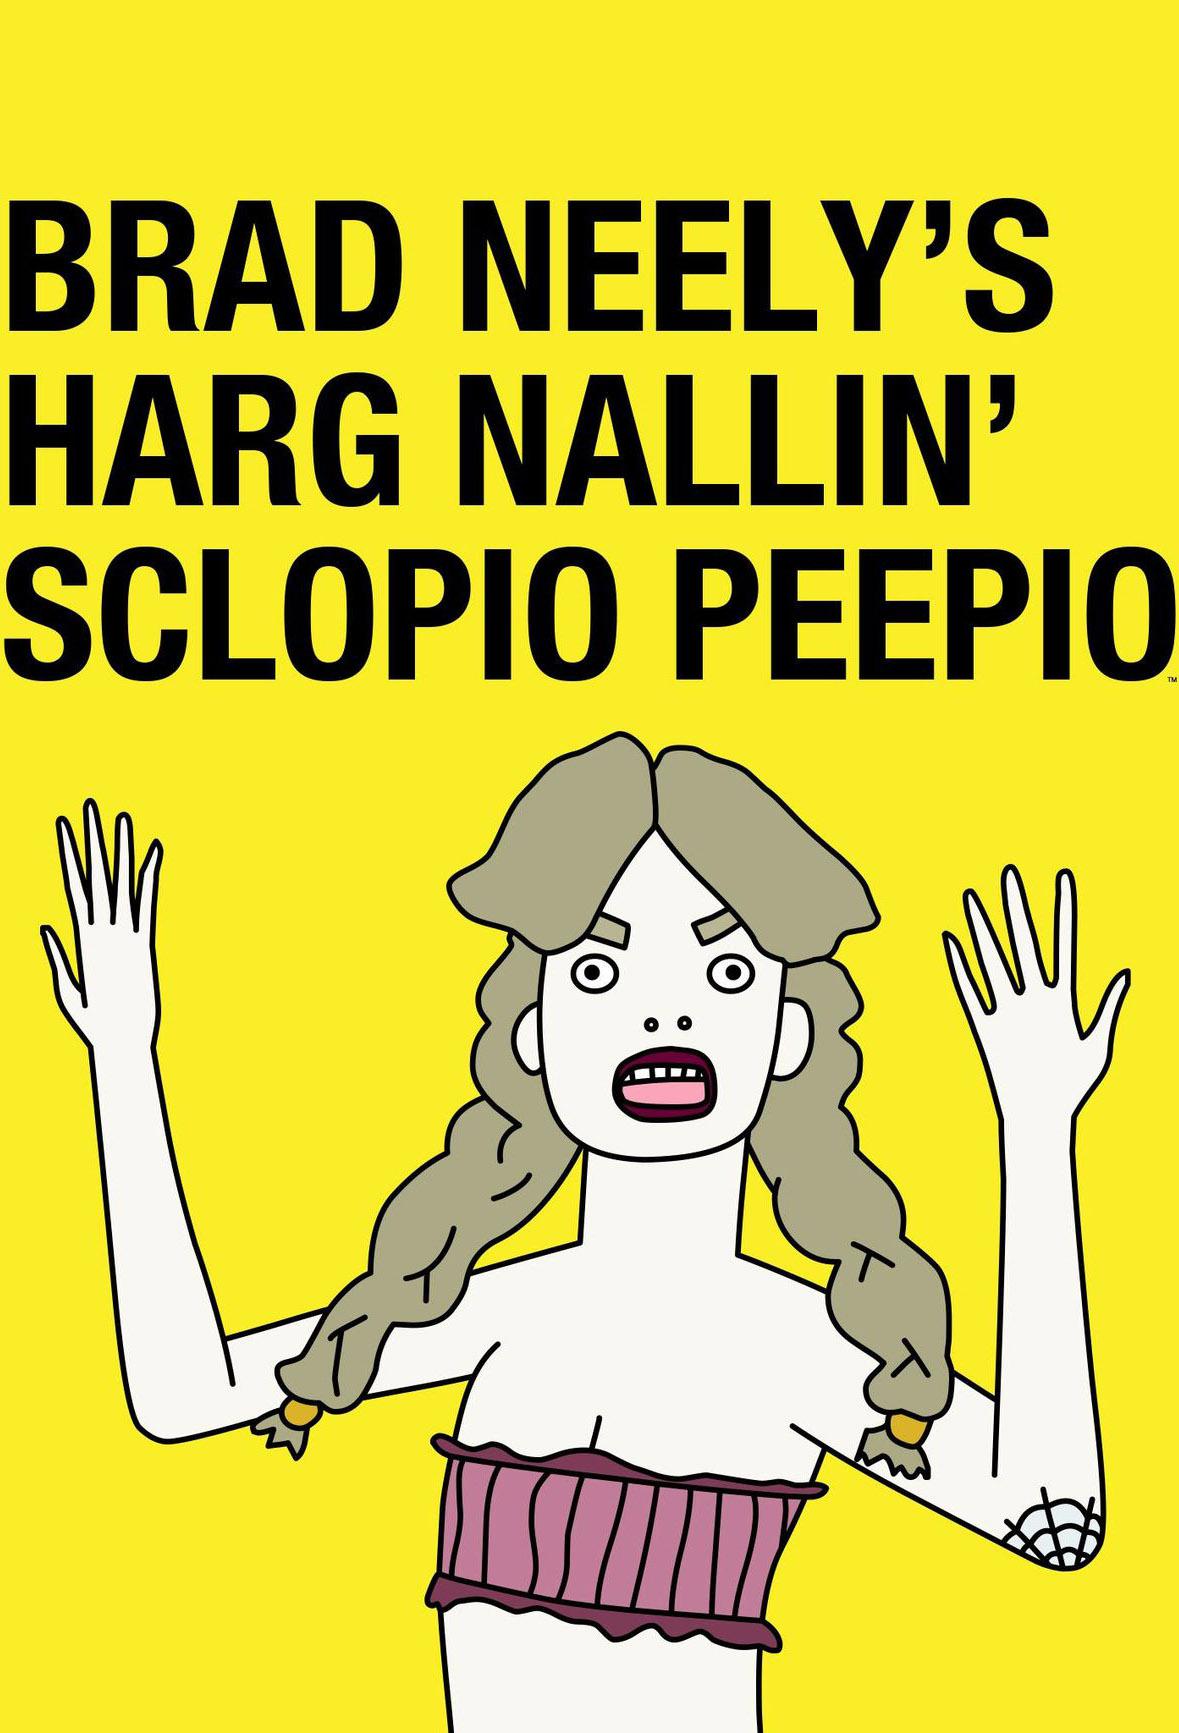 TV ratings for Brad Neely's Harg Nallin' Sclopio Peepio in Portugal. Adult Swim TV series